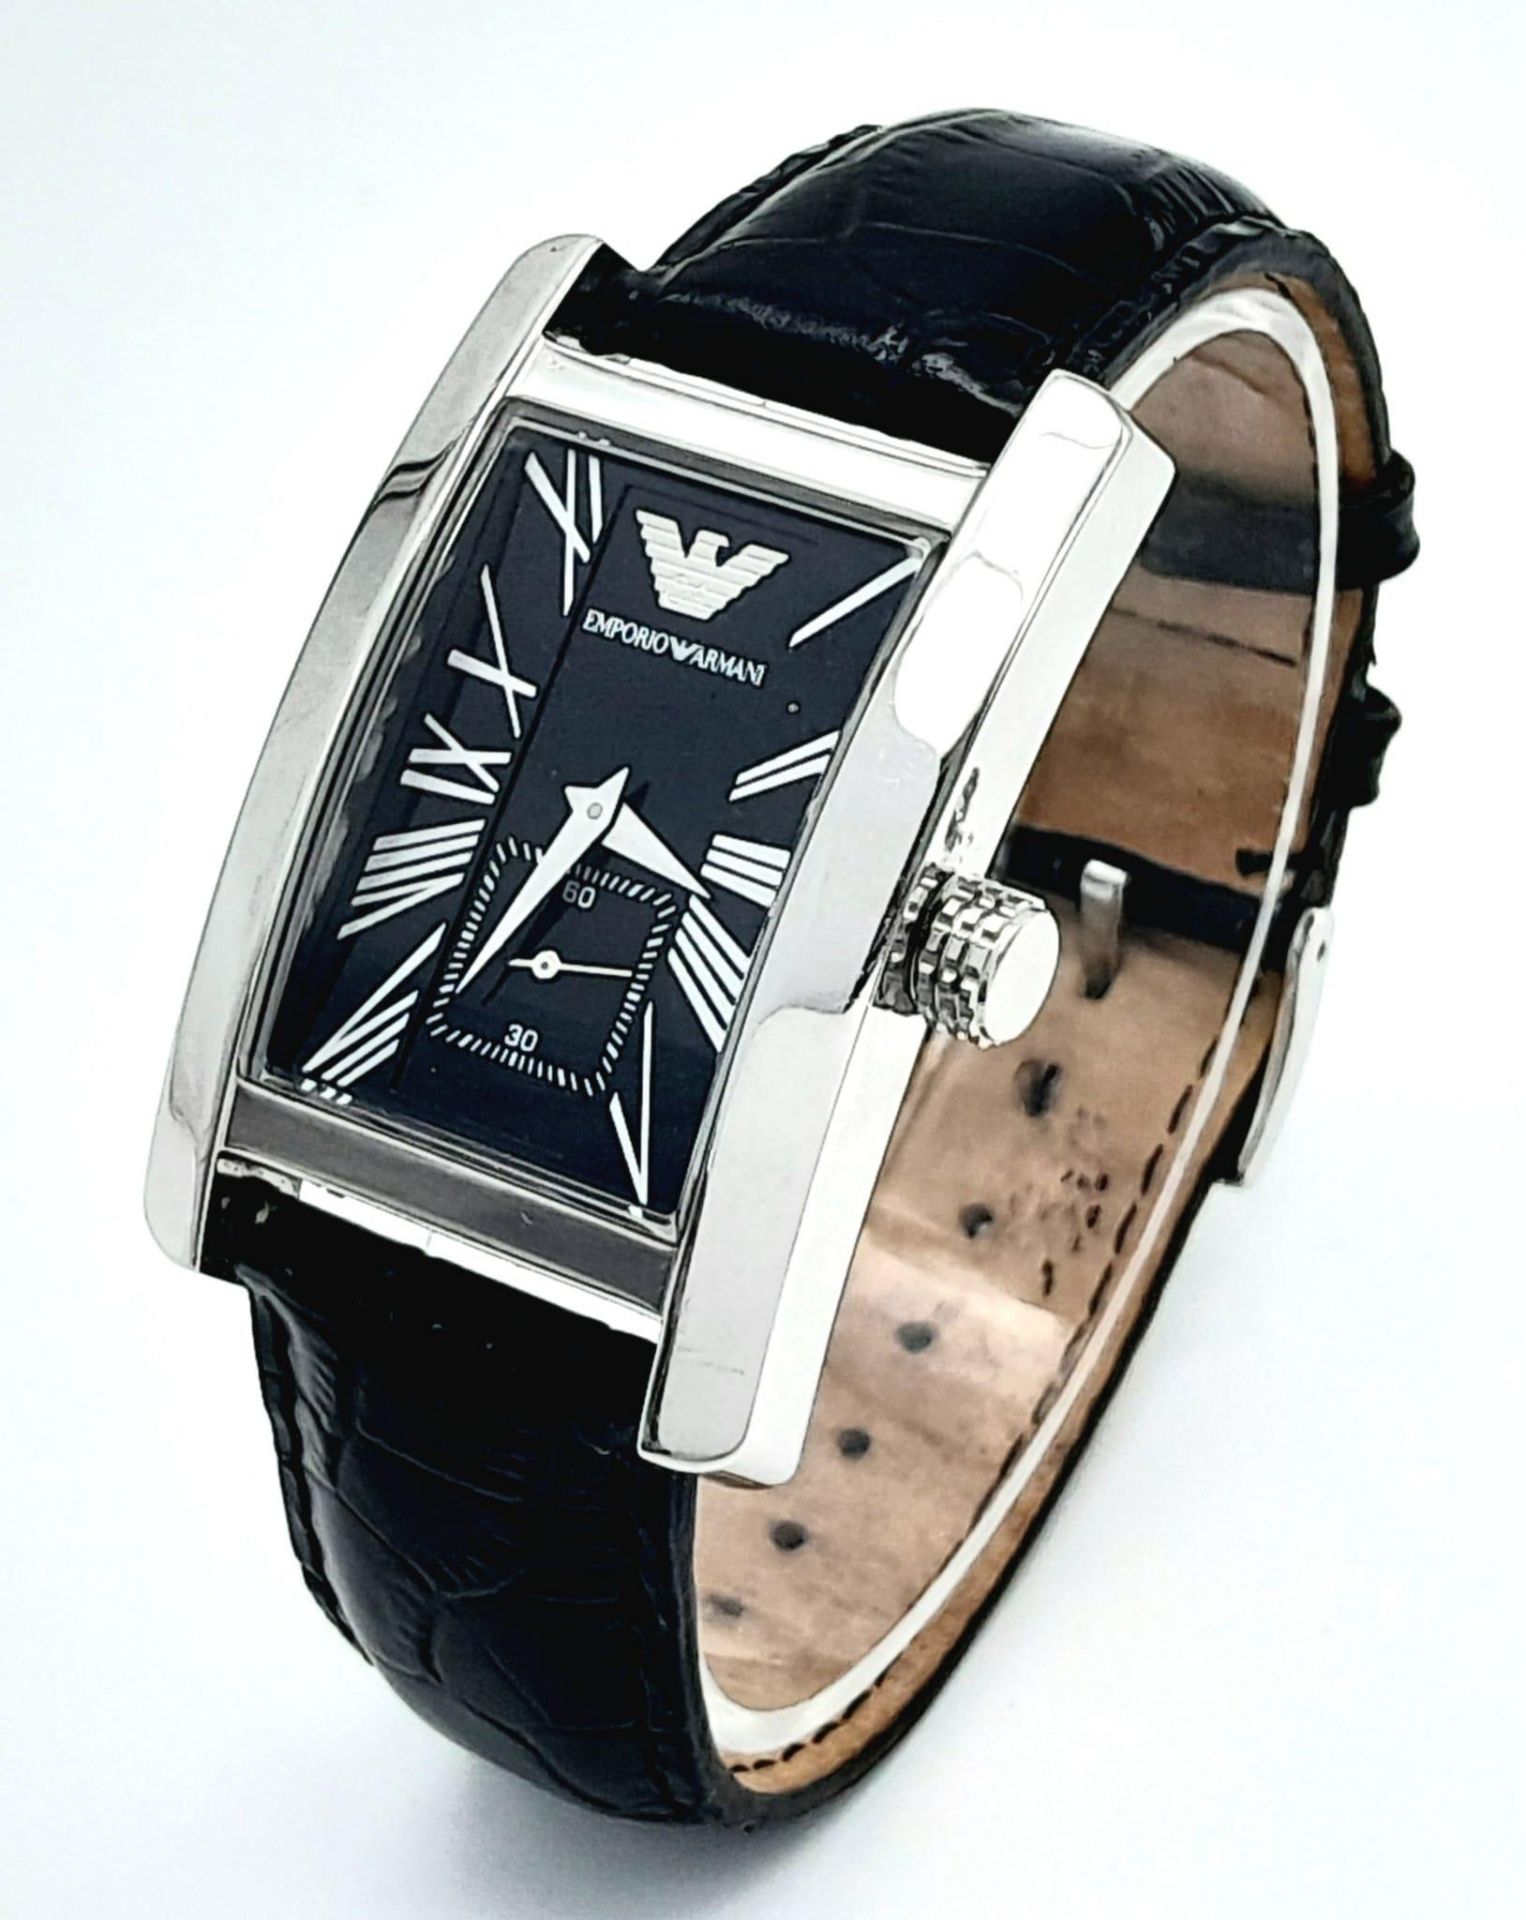 An Armani Designer Quartz Gents Watch. Black leather strap. Rectangular case - 31mm. Black dial with